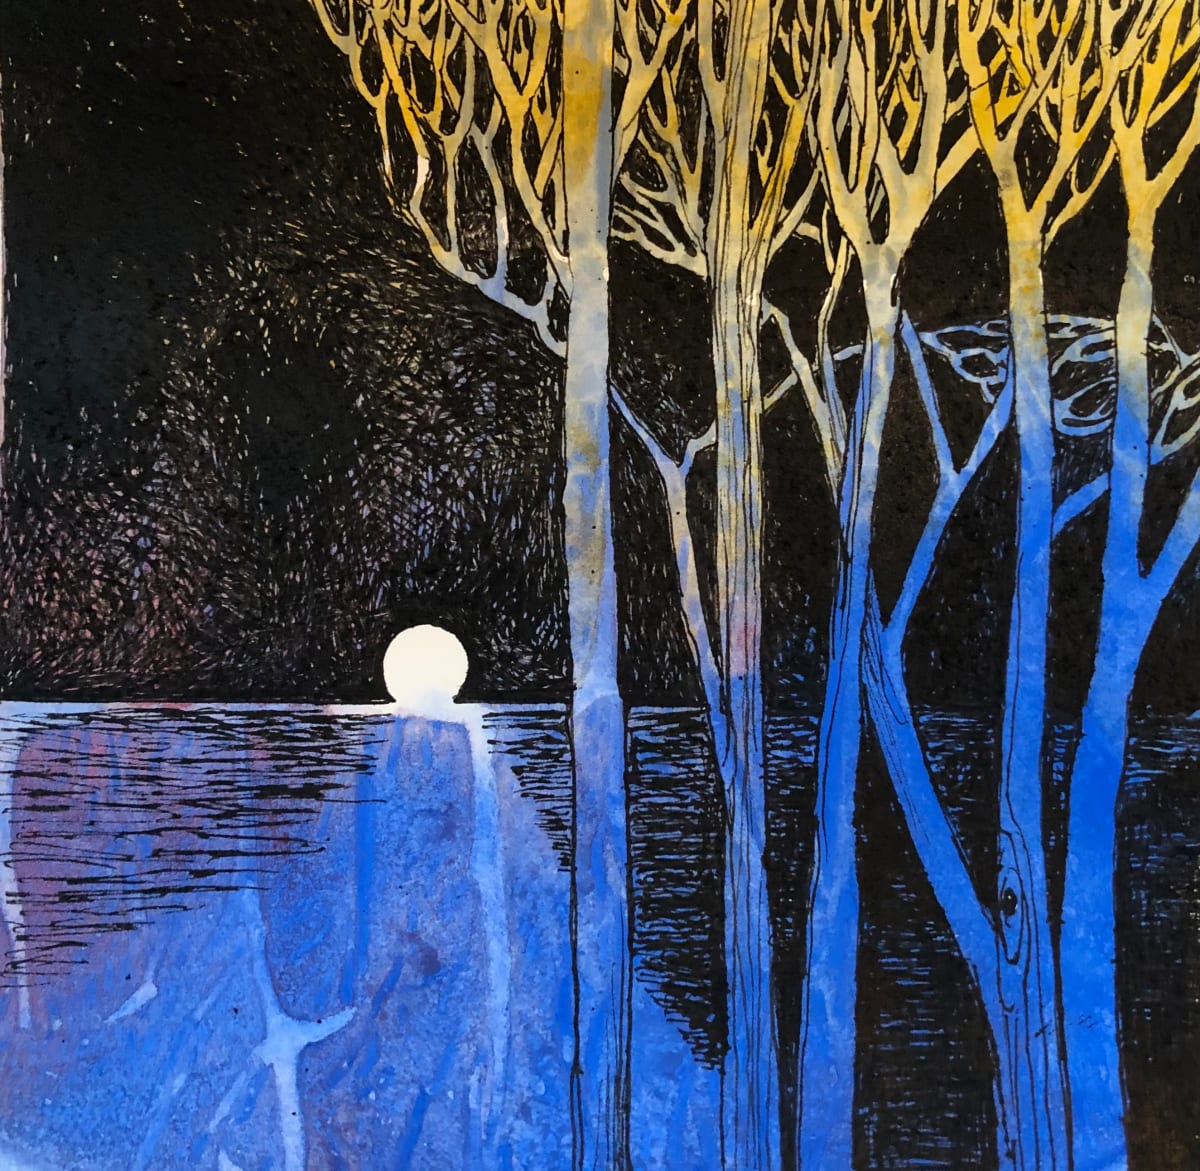 Moonlight Lake- Drawing a Day Series #1 by Helen R Klebesadel  Image: Moonlight Lake